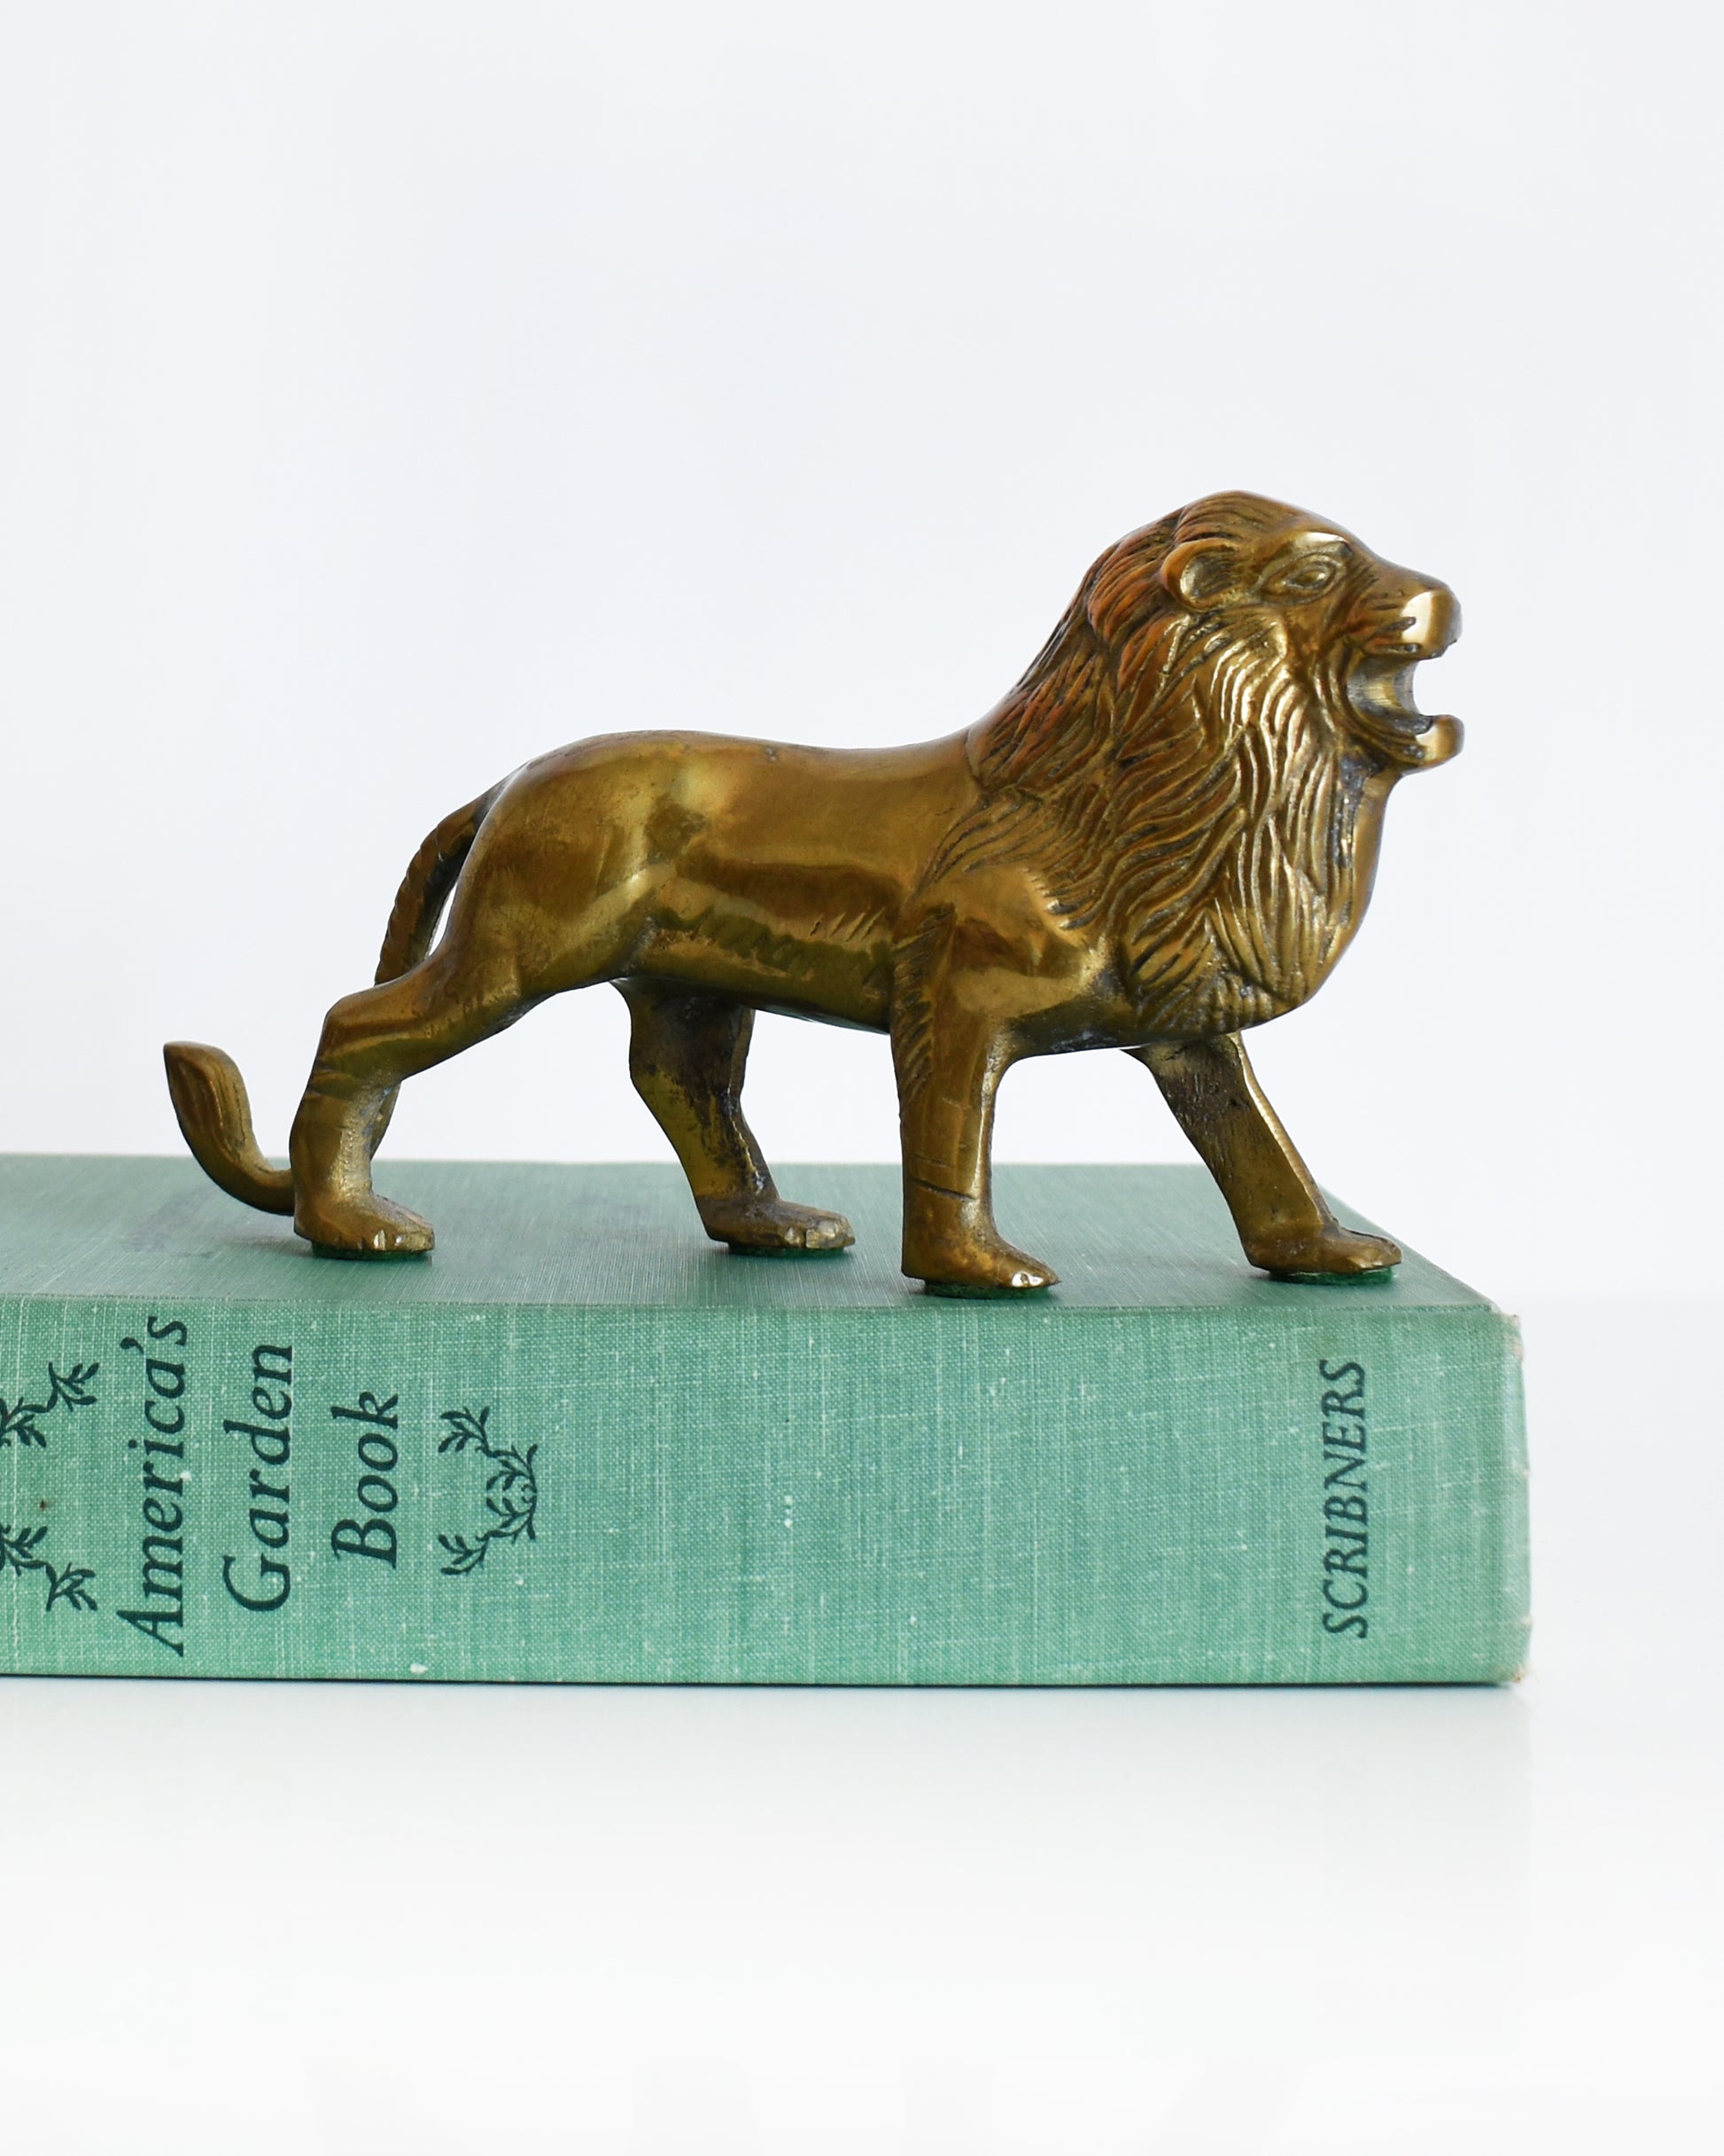 a brass lion figurine standing on a book